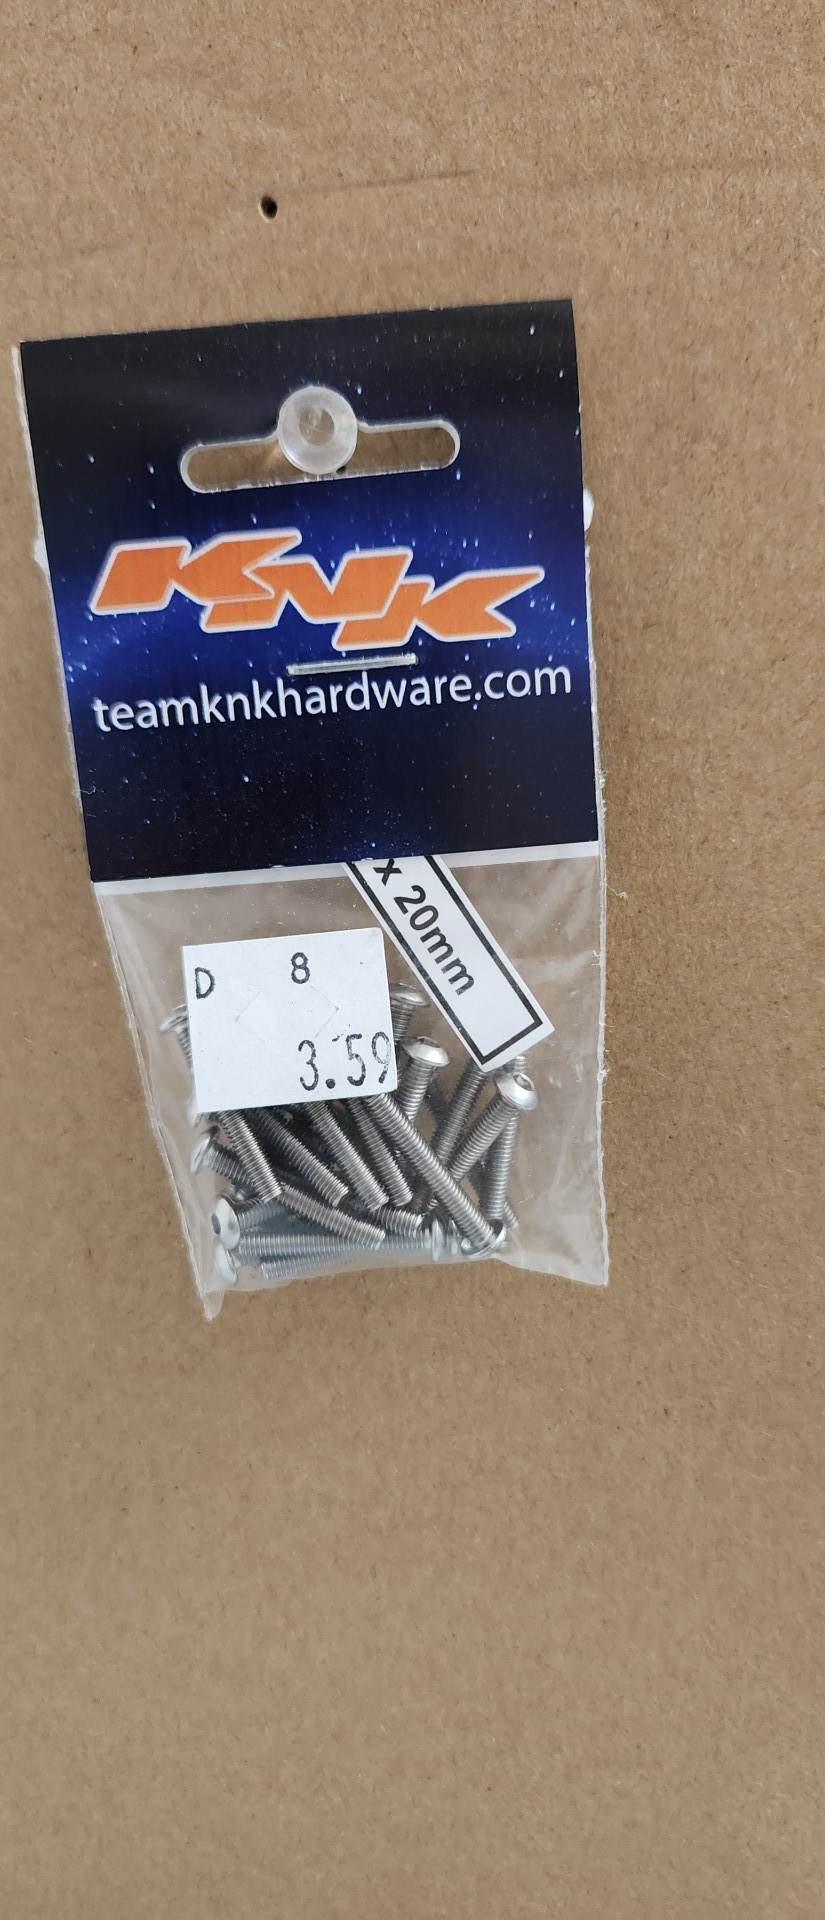 KnK Hardware 3mm x 20mm